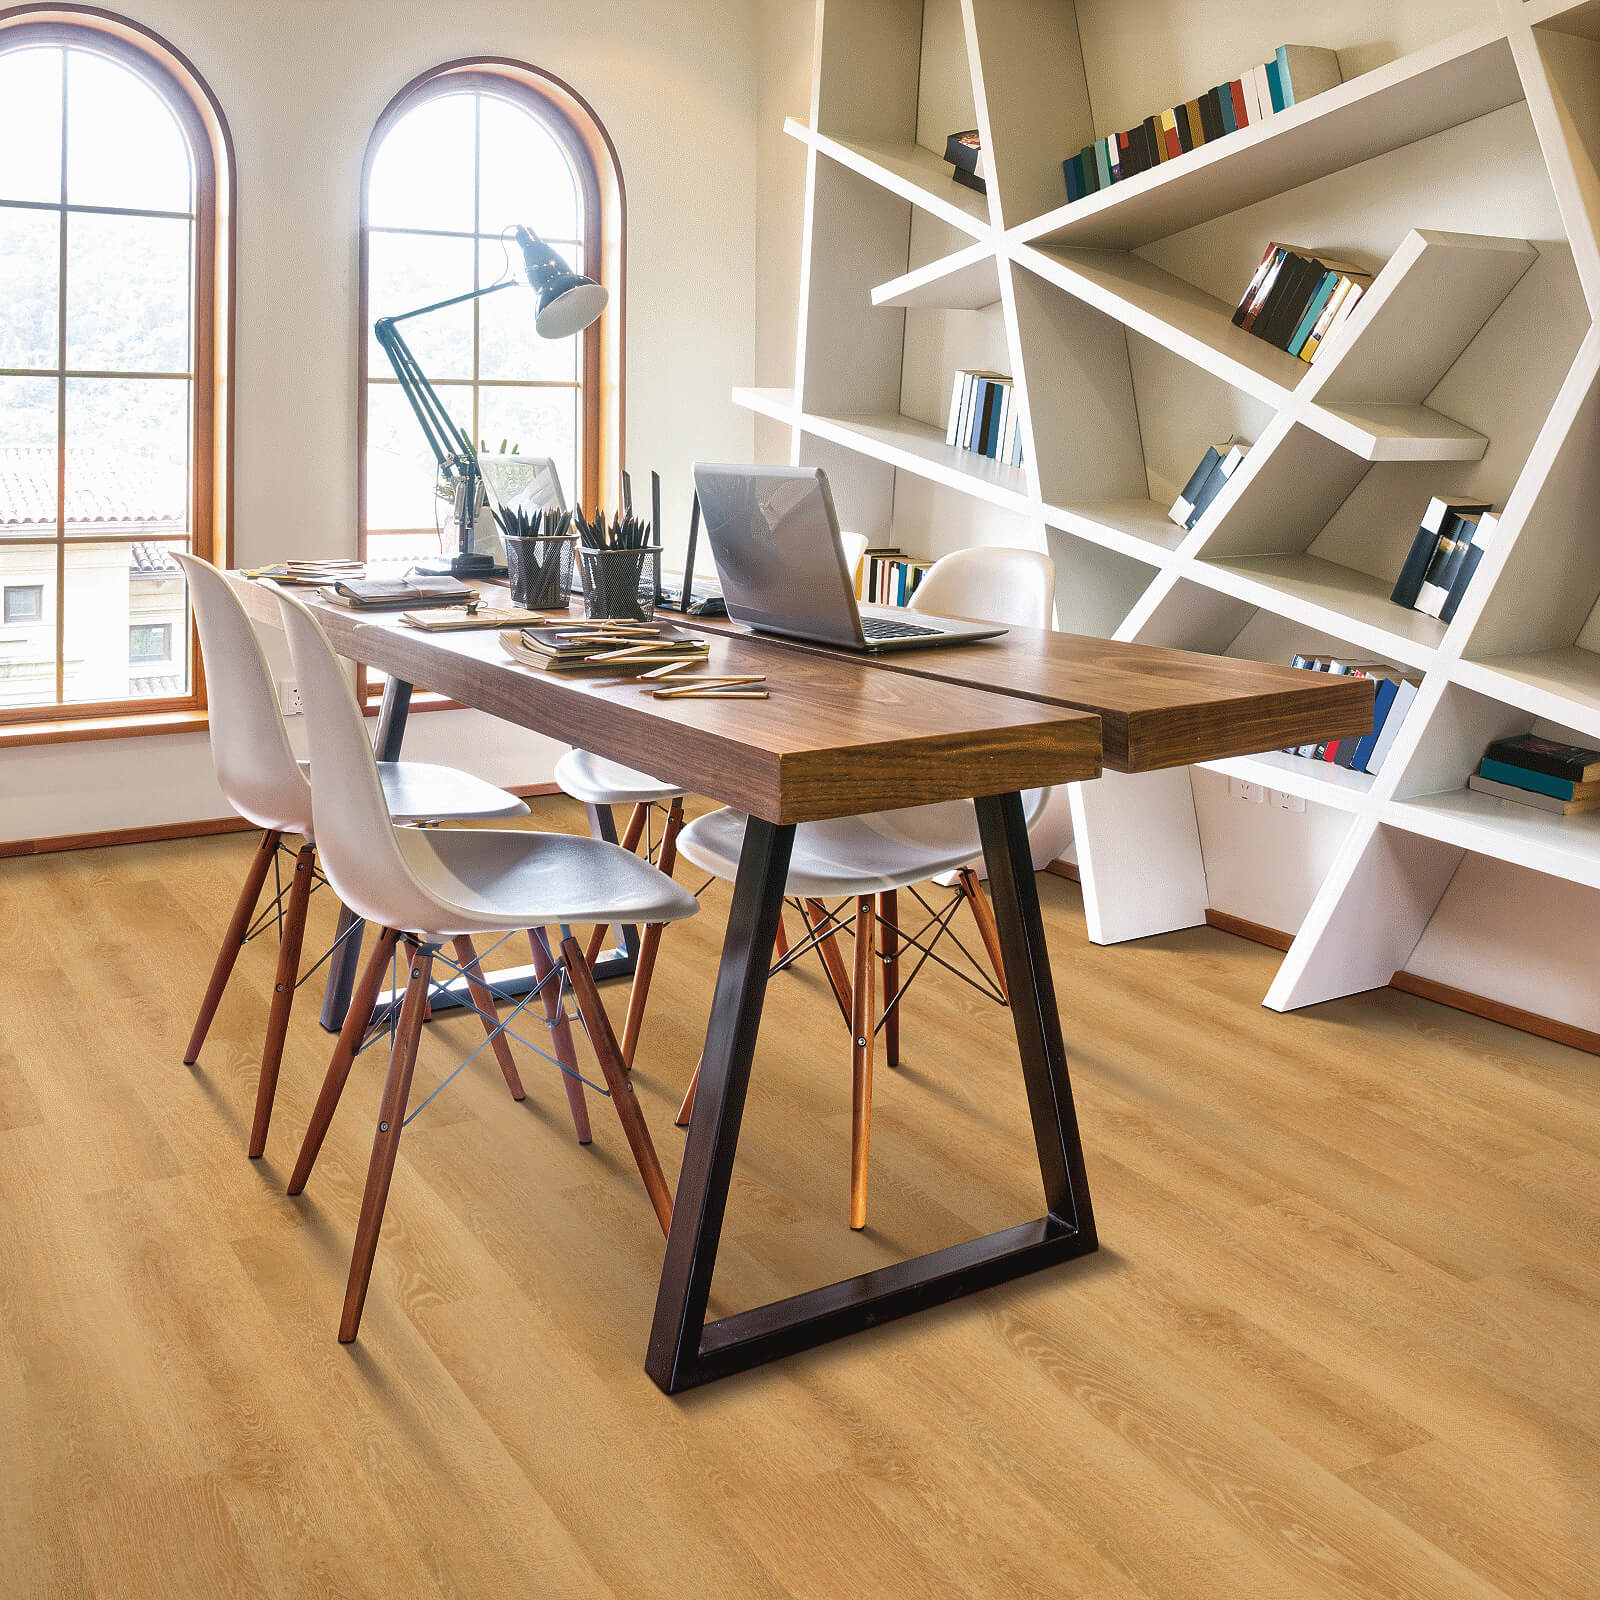 Vinyl flooring for study room | Floor Craft